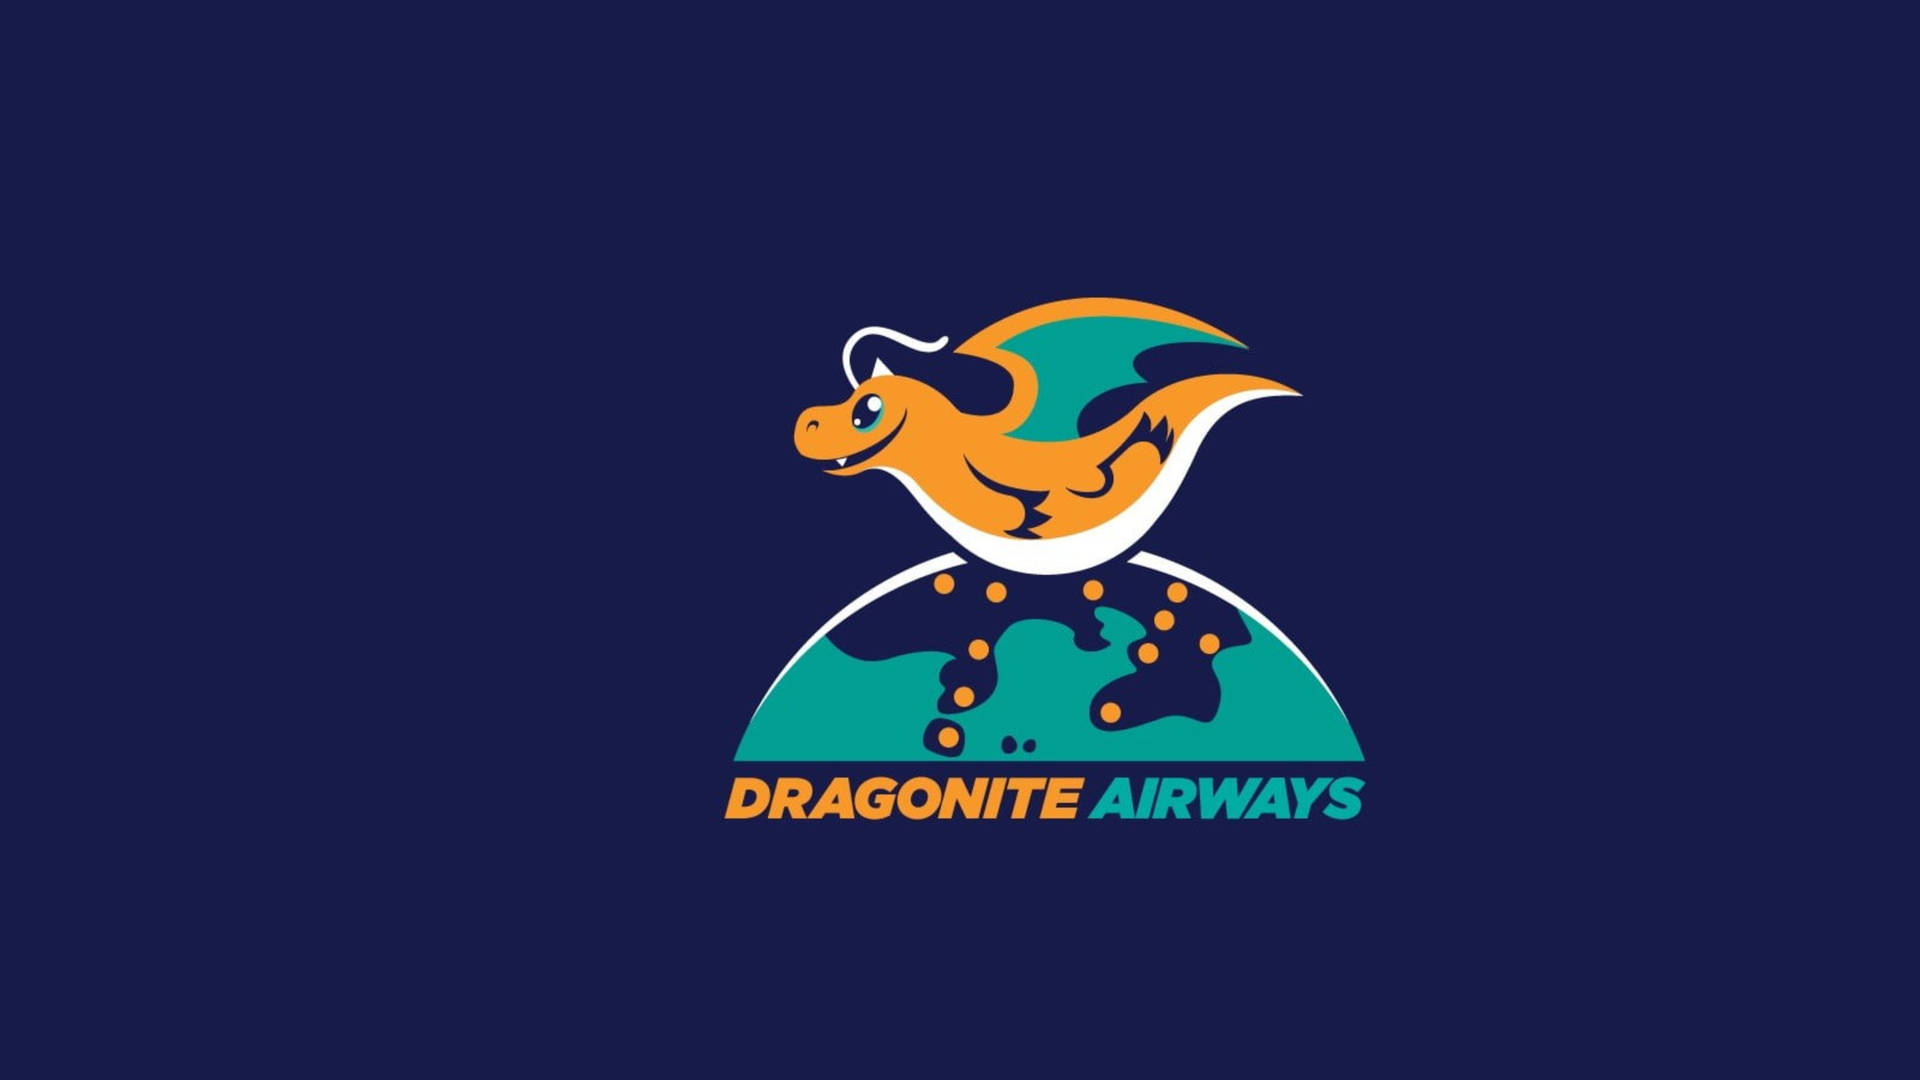 Dragonite Airways Background